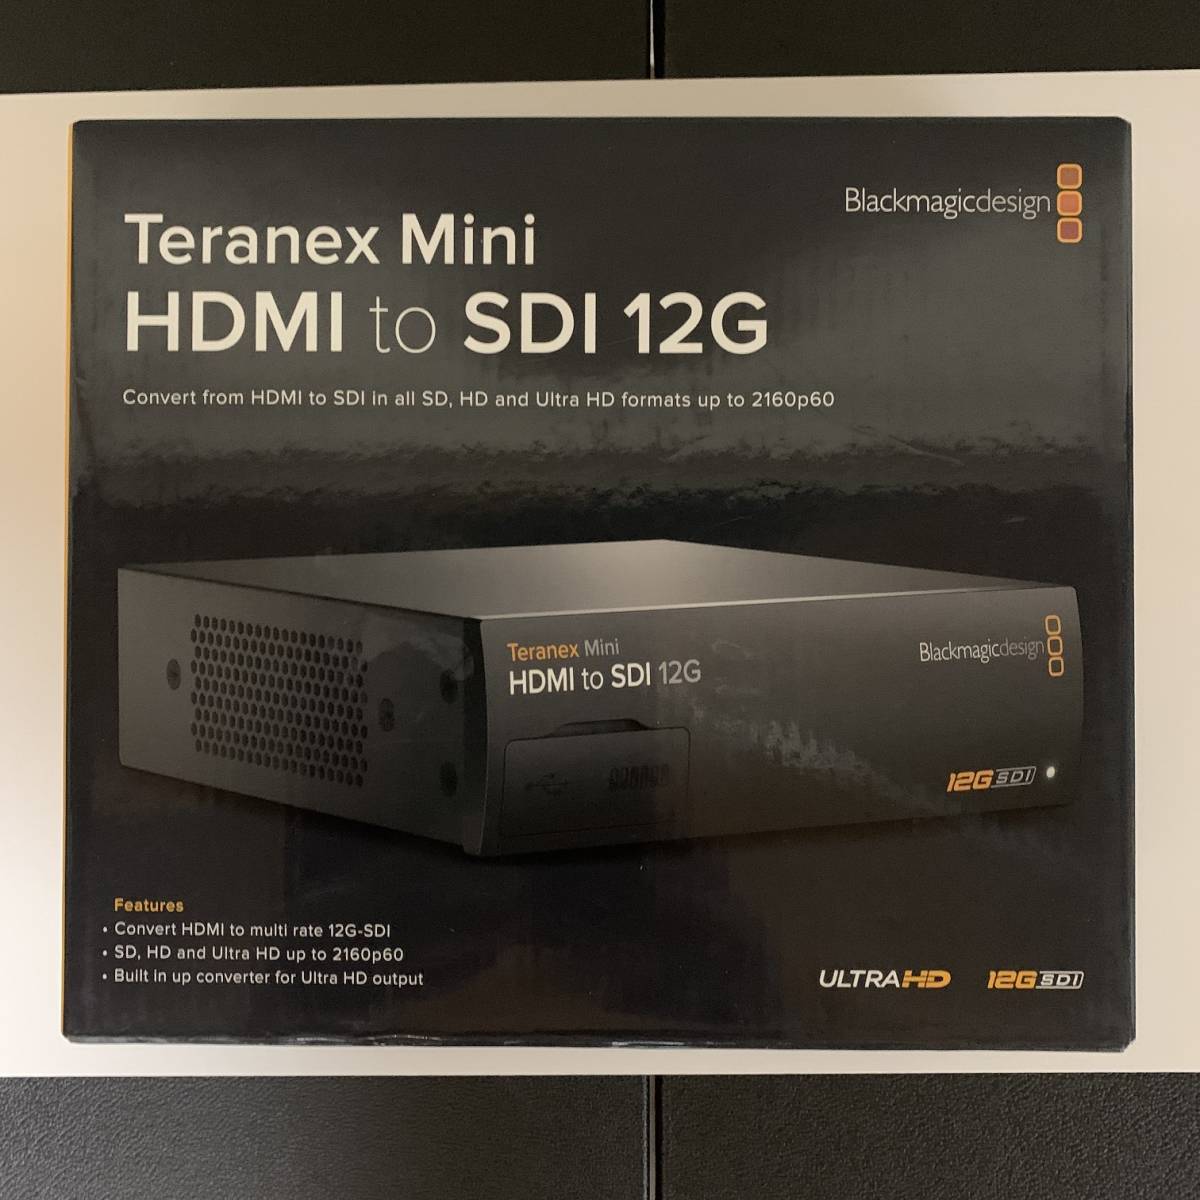 美品】HDMI to SDI コンバータ Teranex Mini HDMI to SDI Blackmagic Design  JChere雅虎拍卖代购